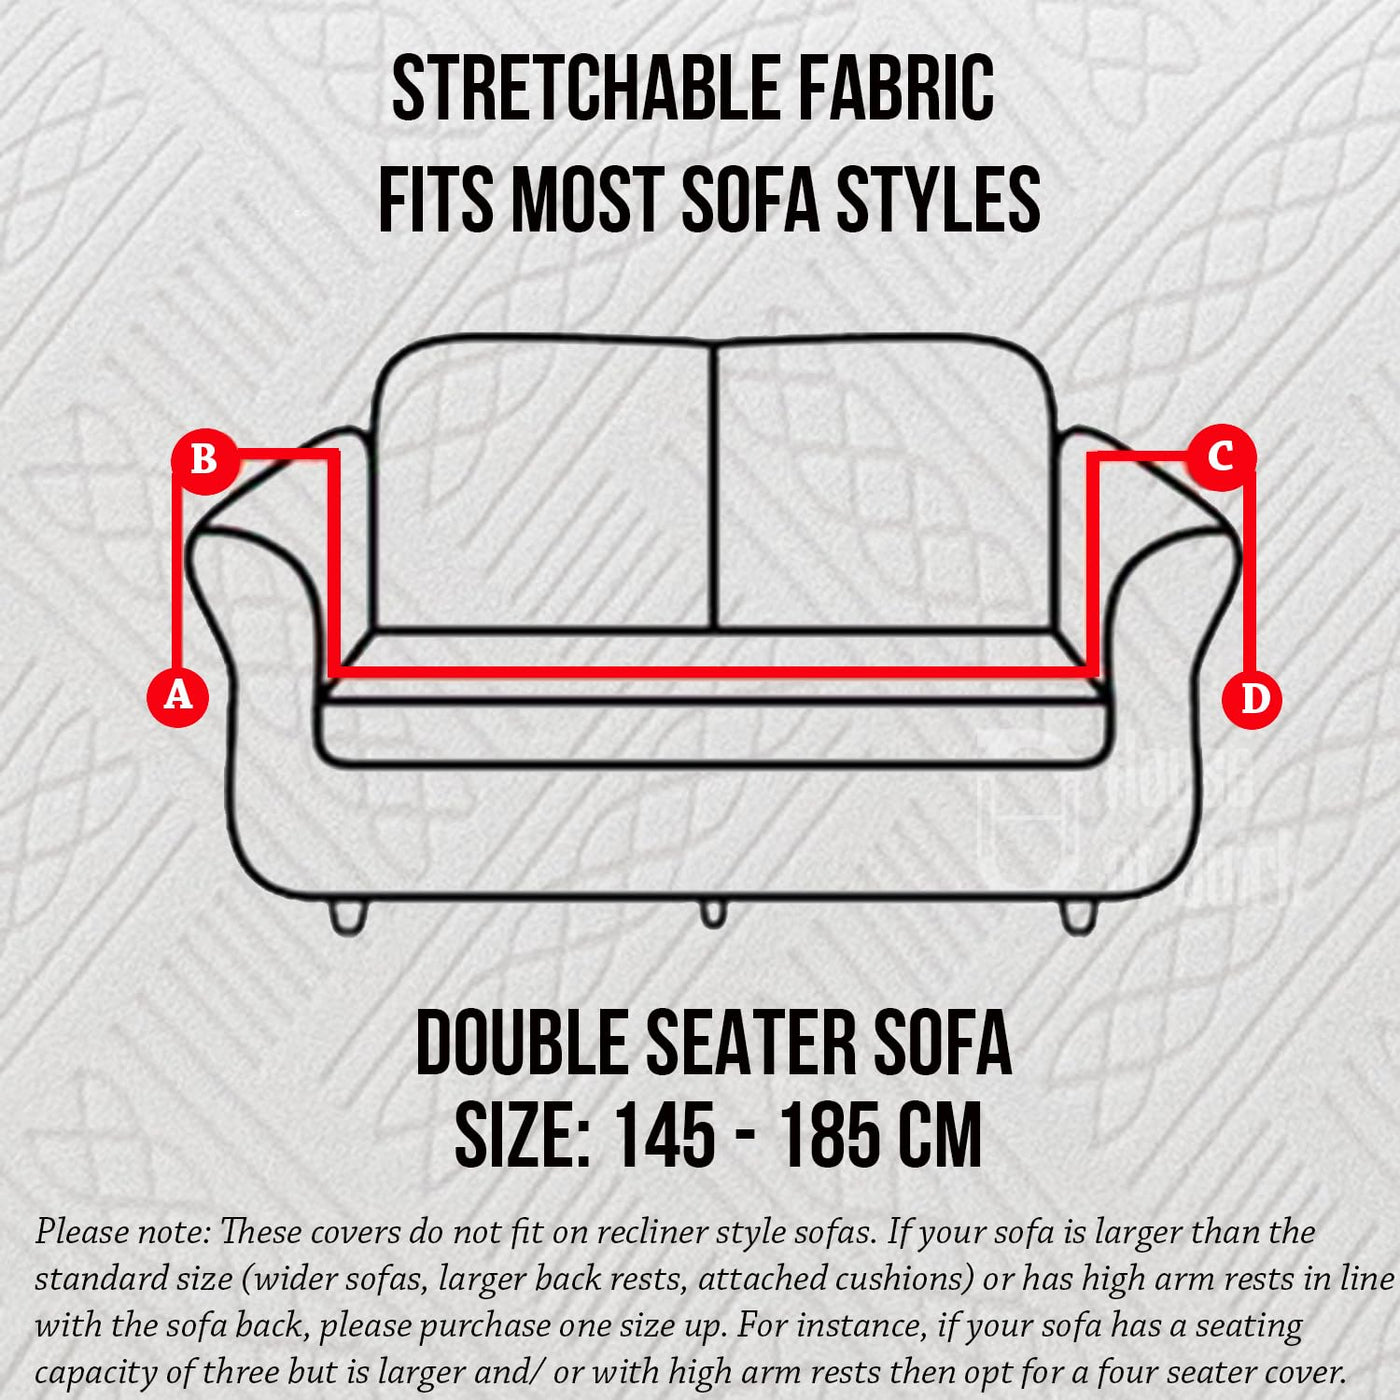 Universal Jacquard Fabric Sofa Cover- Smoke